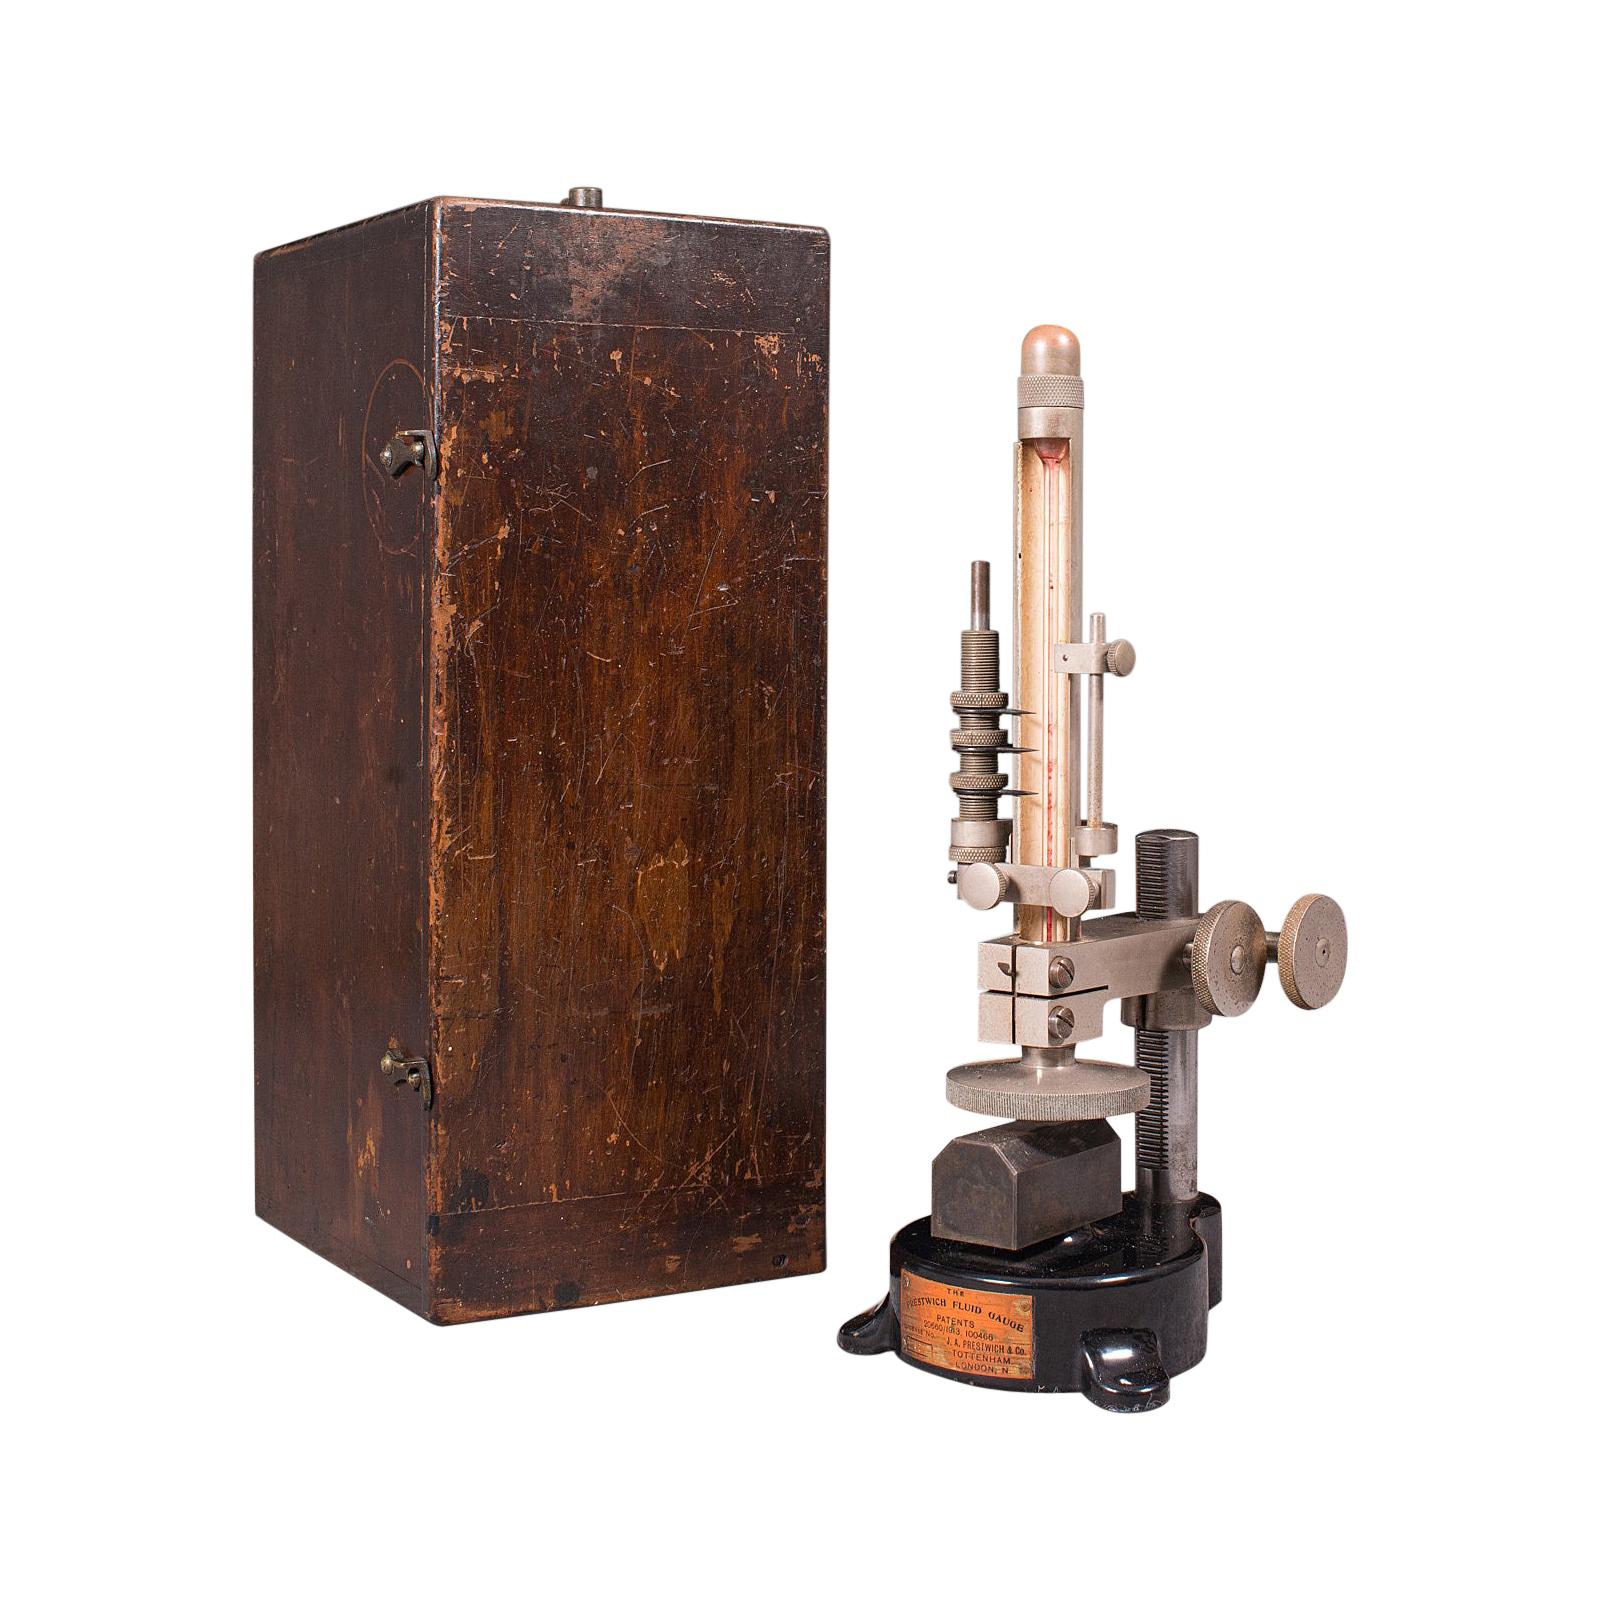 Antique Prestwich Fluid Gauge, English, Aeronautical, Scientific Instrument For Sale